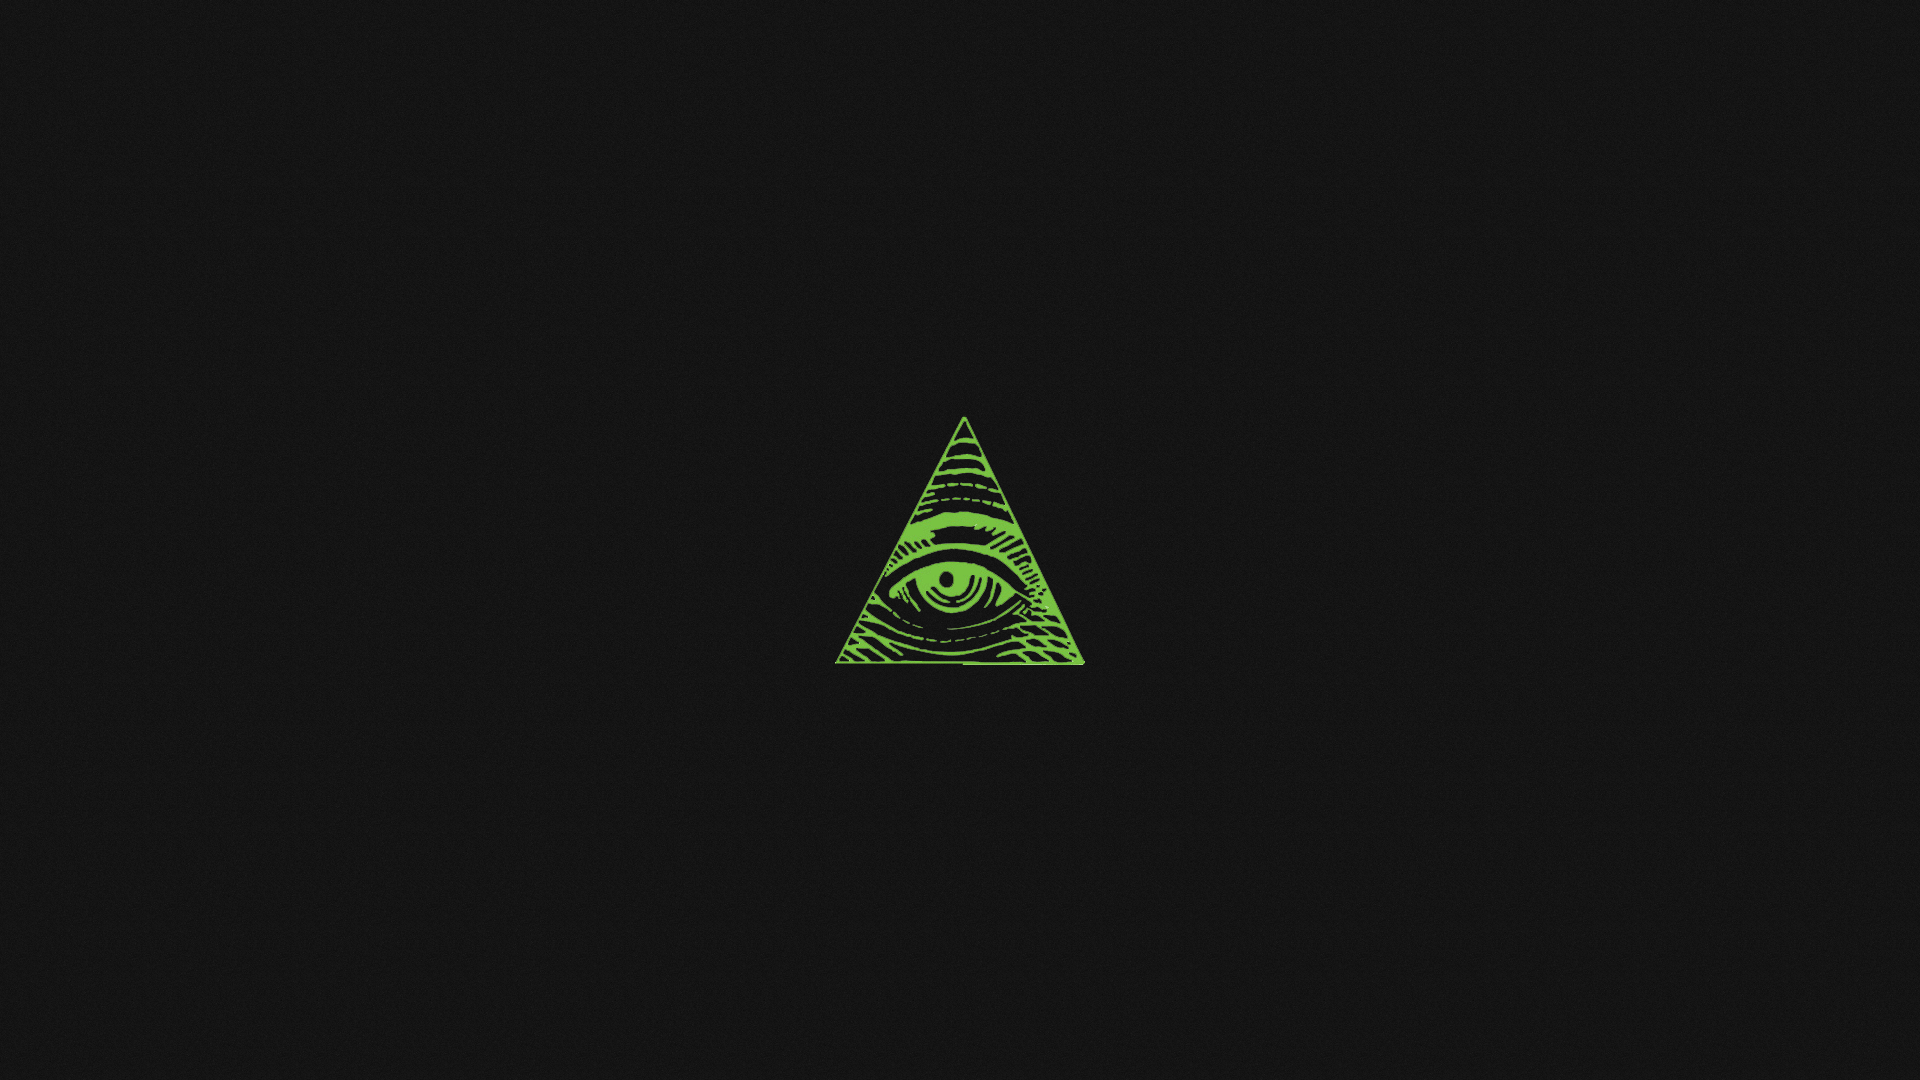 Illuminati Logo Wallpaper Pc Android iPhone And iPad